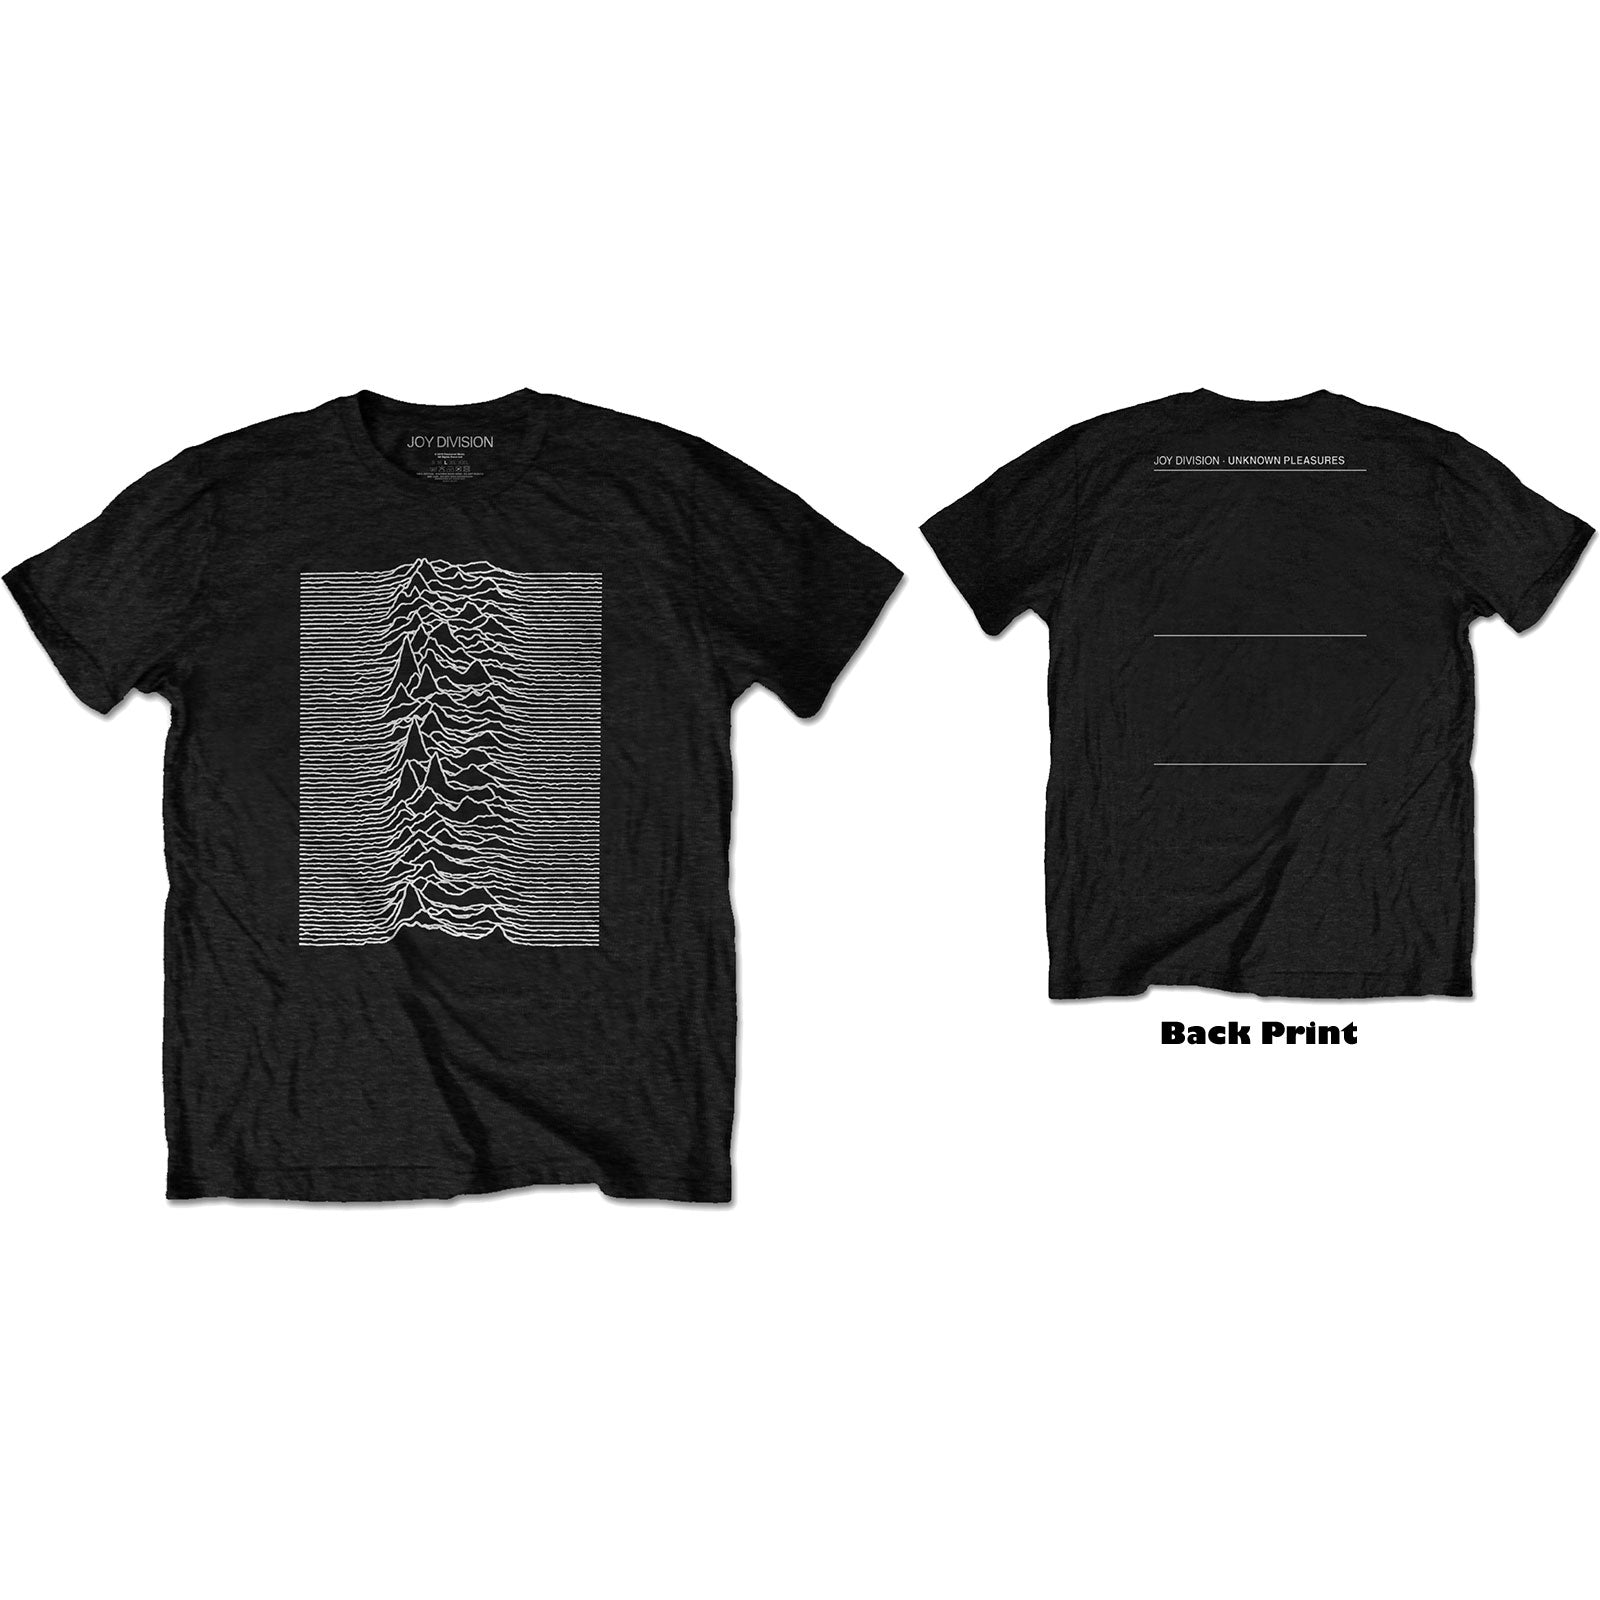 Unknown Pleasures Back Print T-Shirt – Yella Brick Road